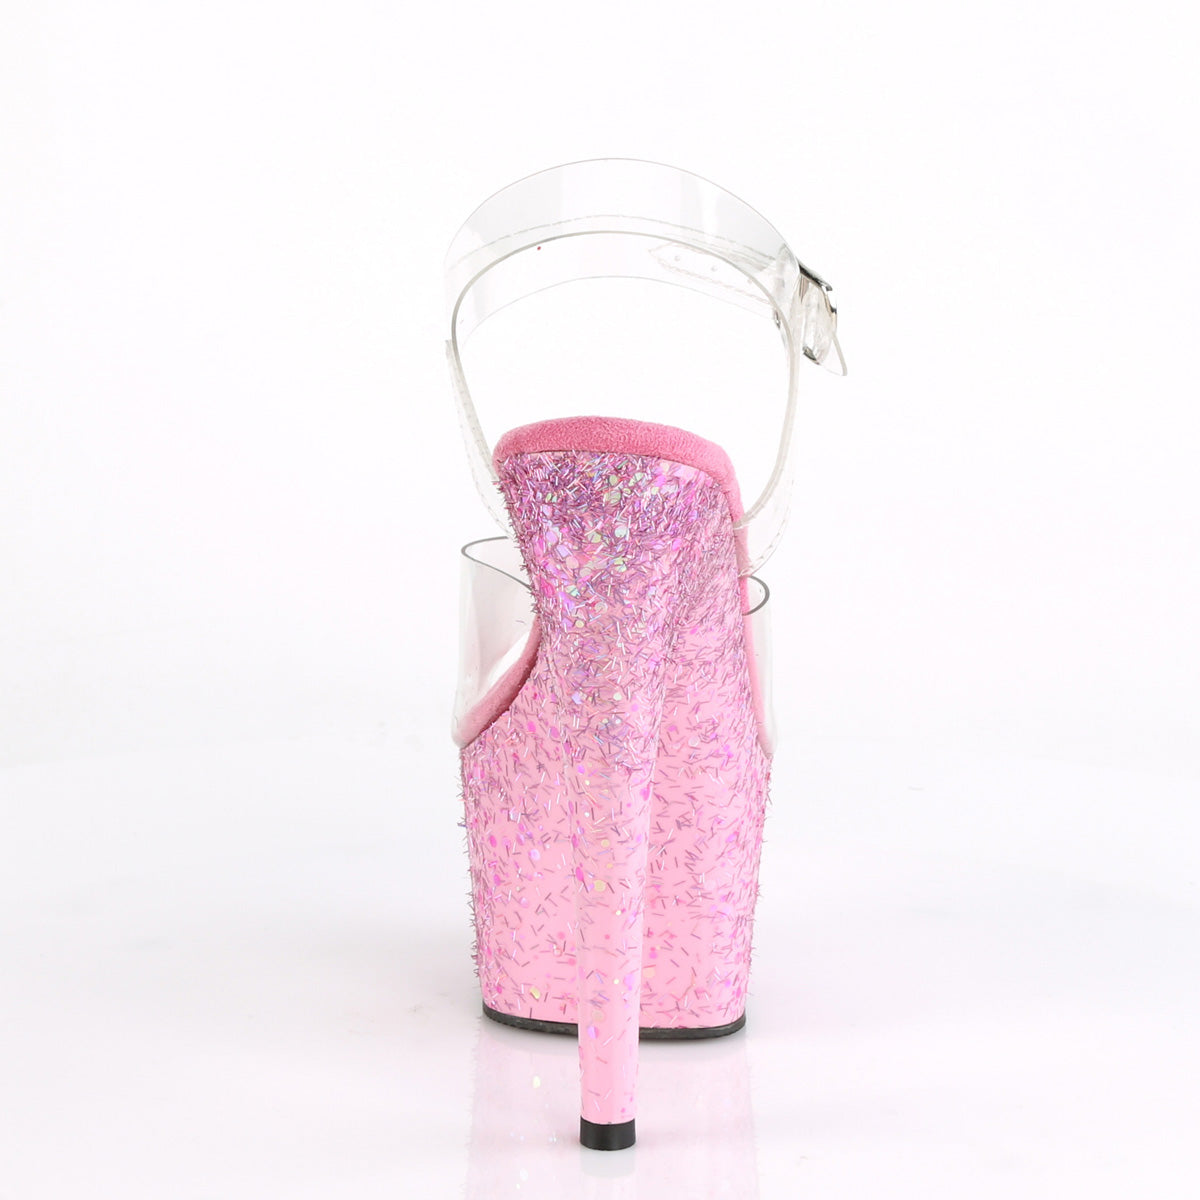 ADORE-708CF Pleaser Clear/Pink Confetti Platform Shoes [Exotic Dance Shoes]